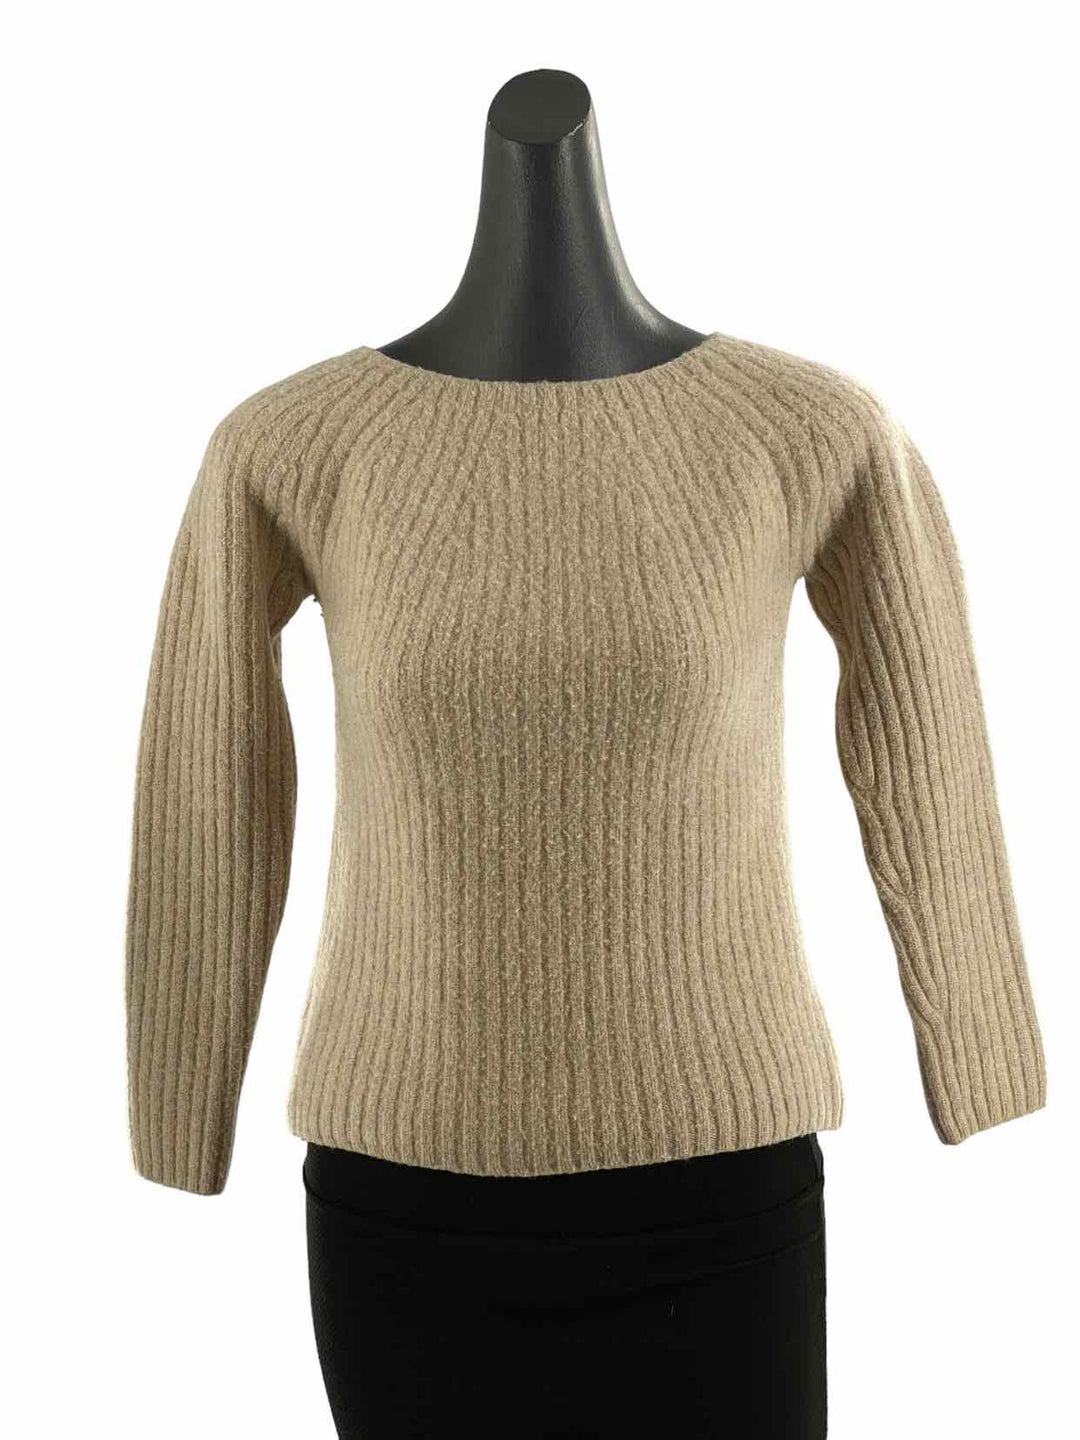 Adrienne Vittadini Size M light beige 100% cashmere Sweater